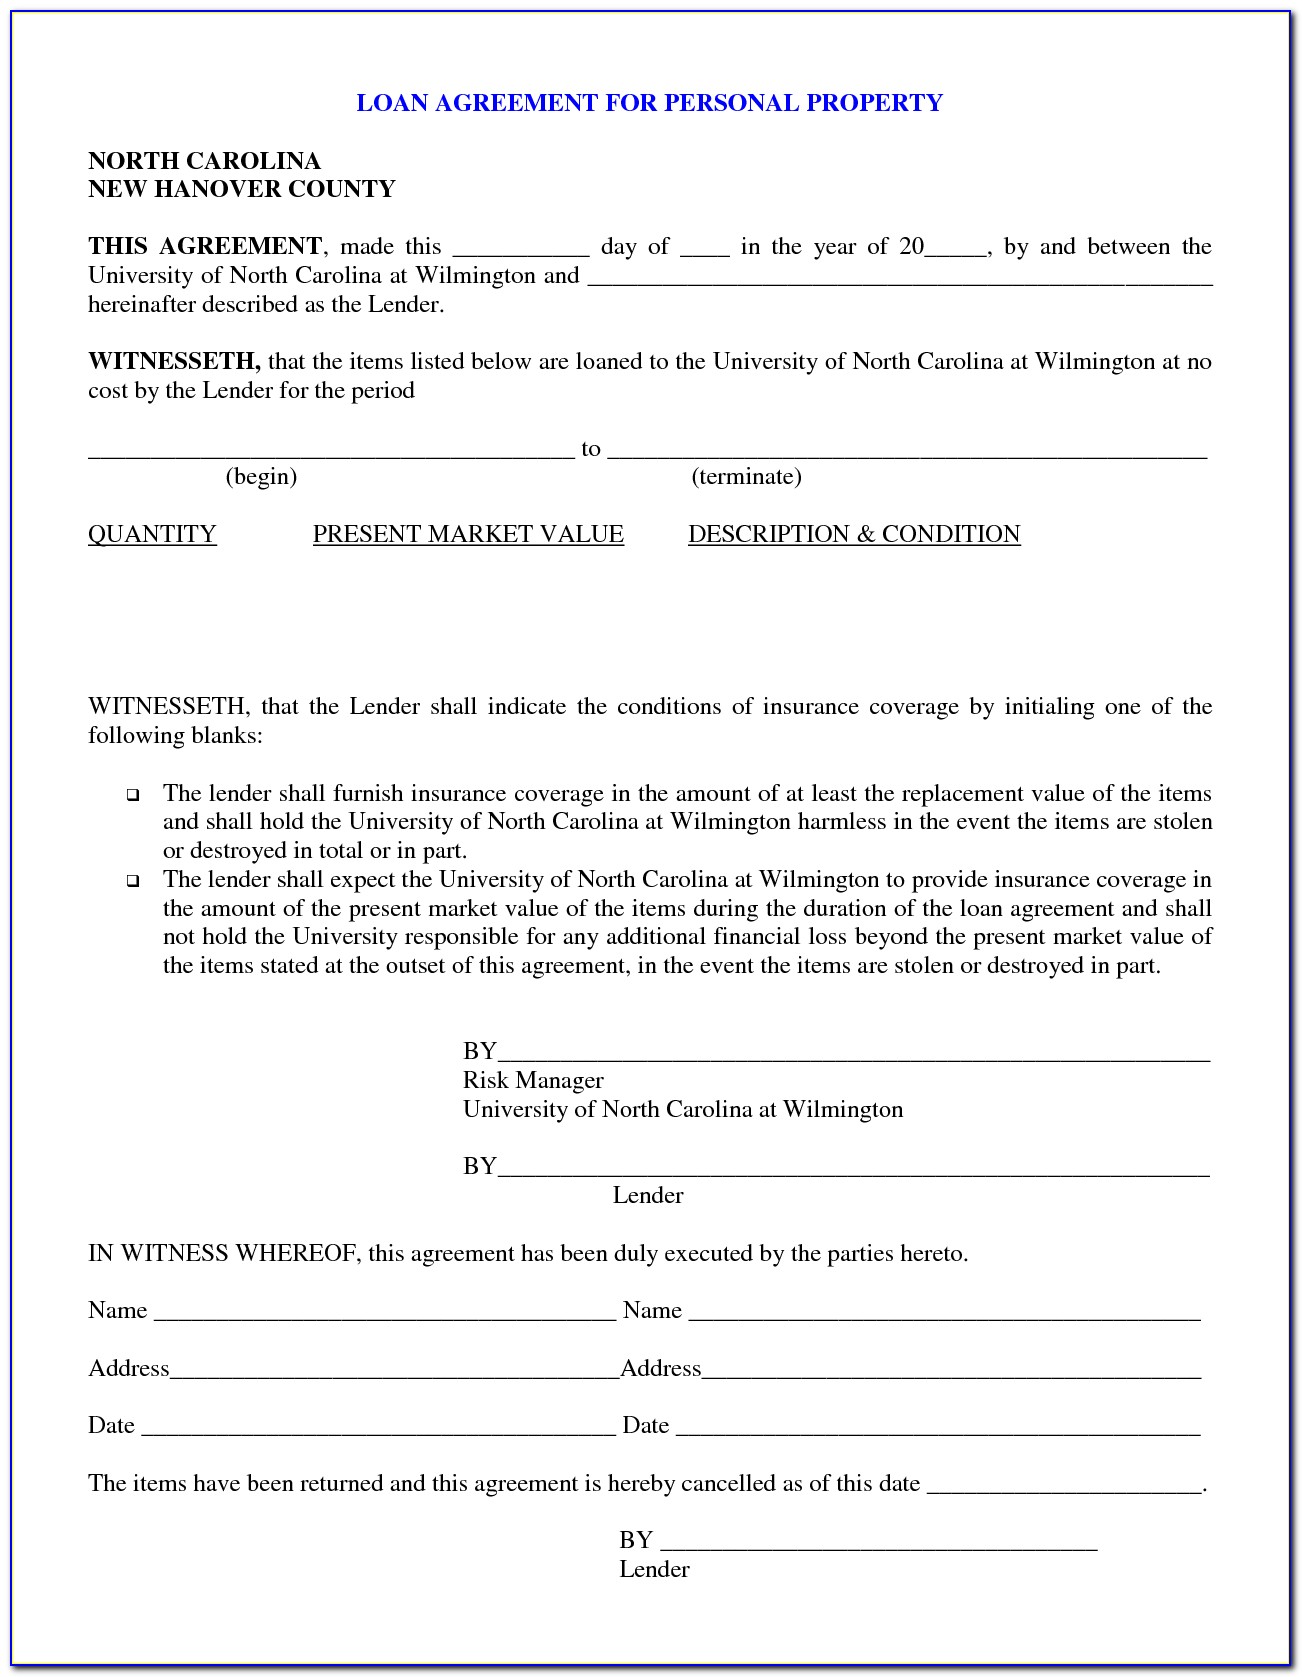 Sample Loan Agreement Form Download